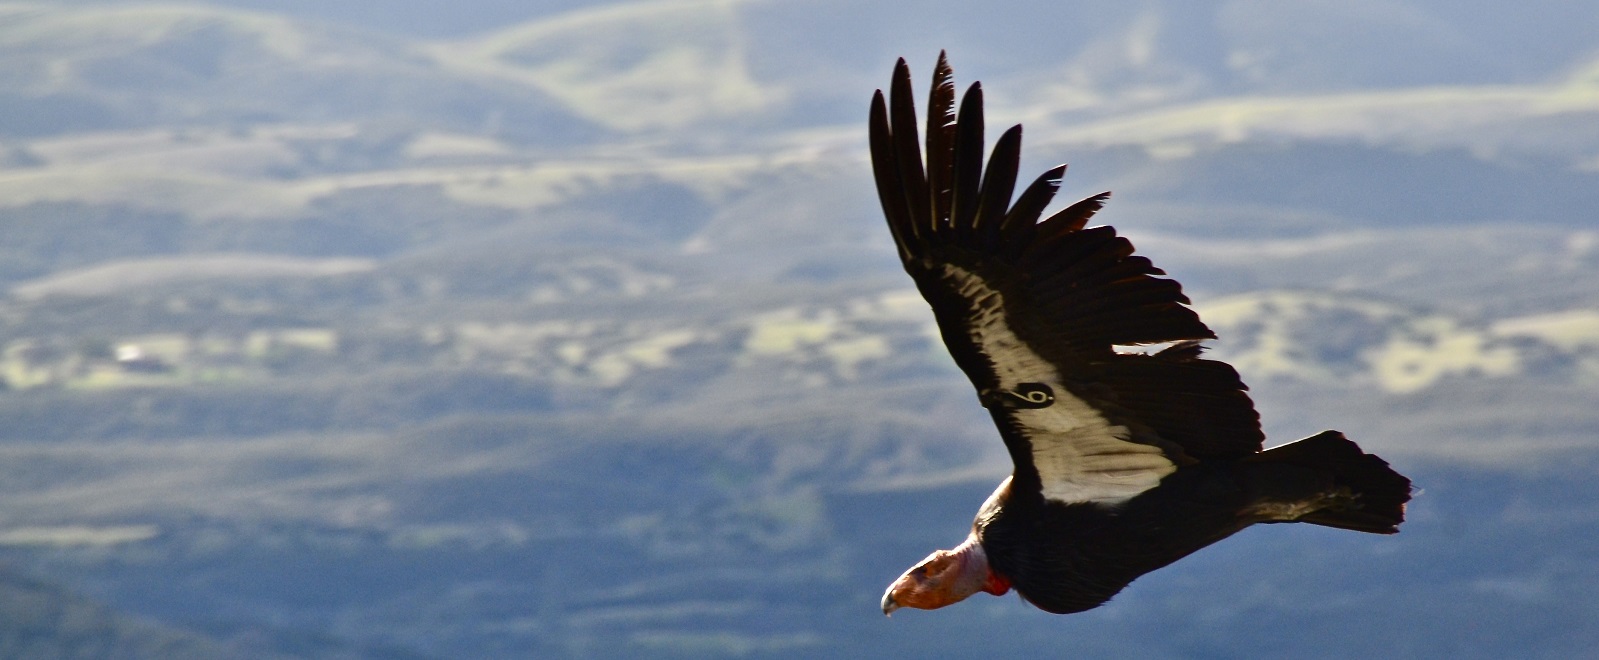 Condor Viewing Tips Pinnacles National Park U S National Park Service